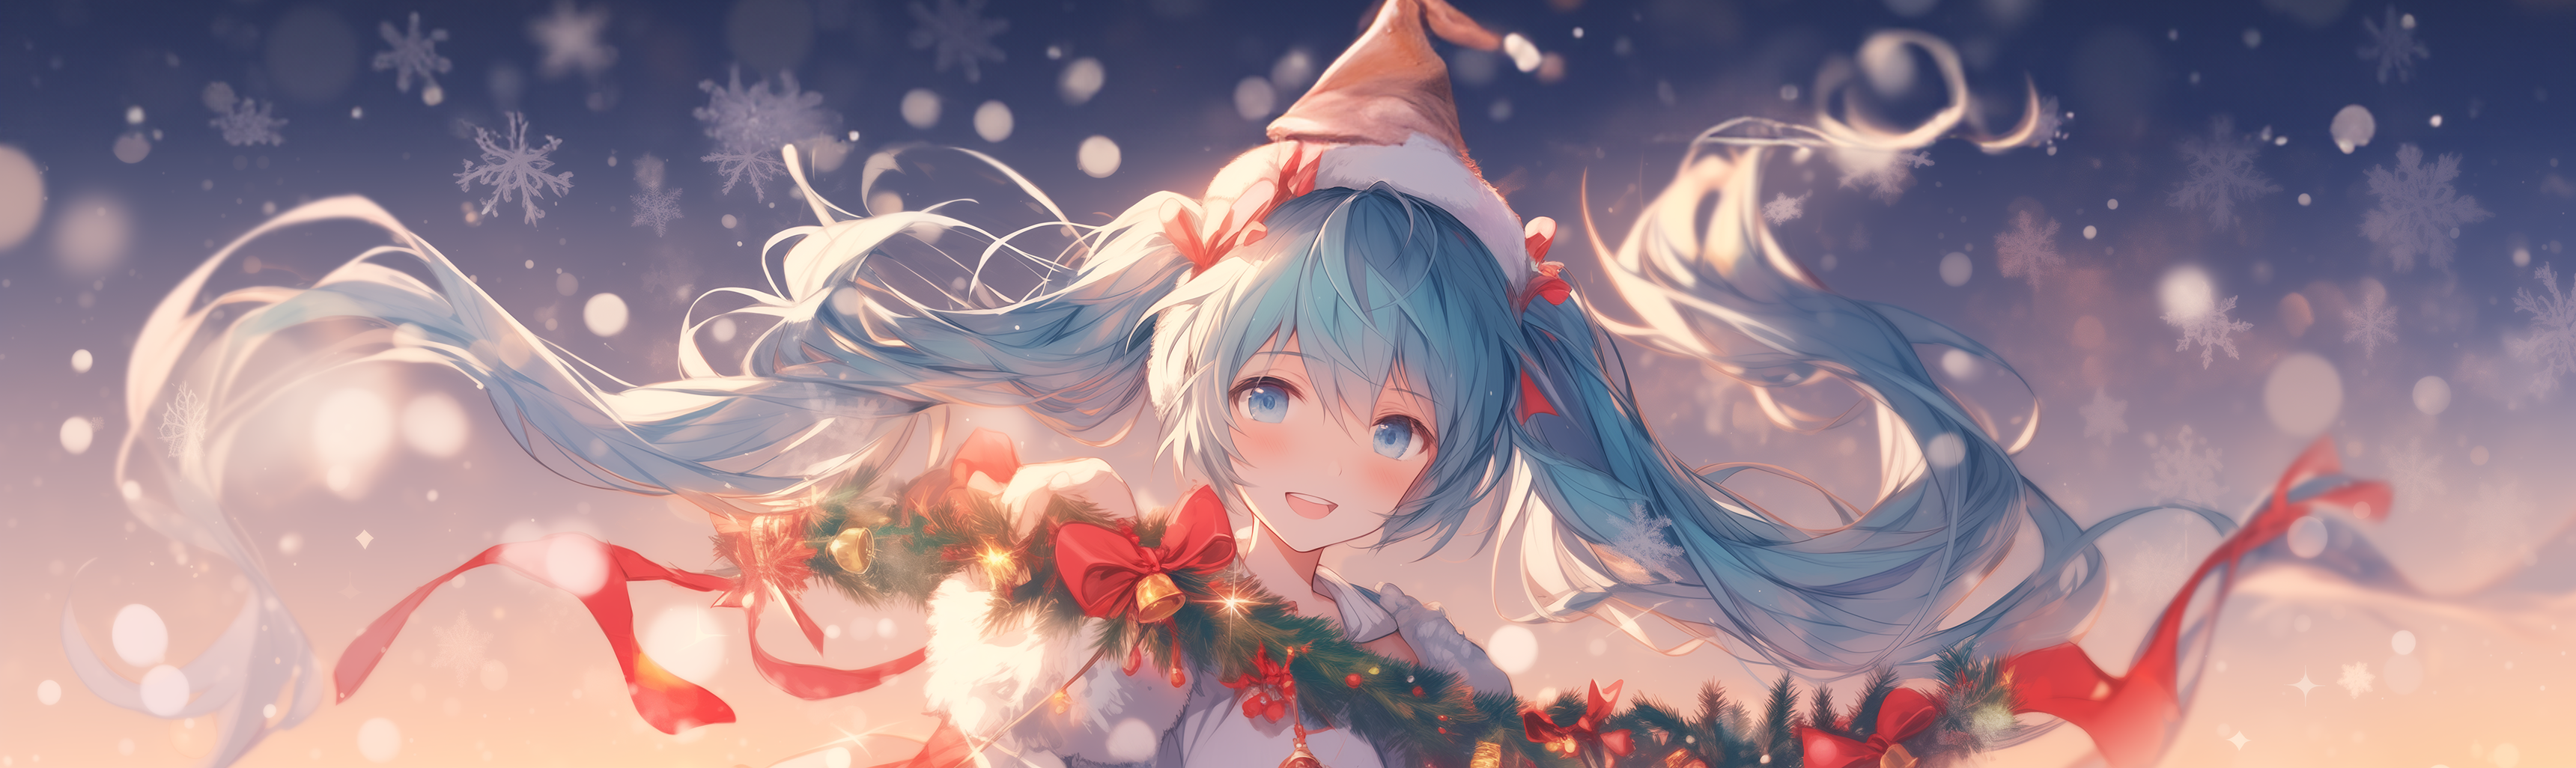 Hatsune Miku Christmas Bells 3440x1026